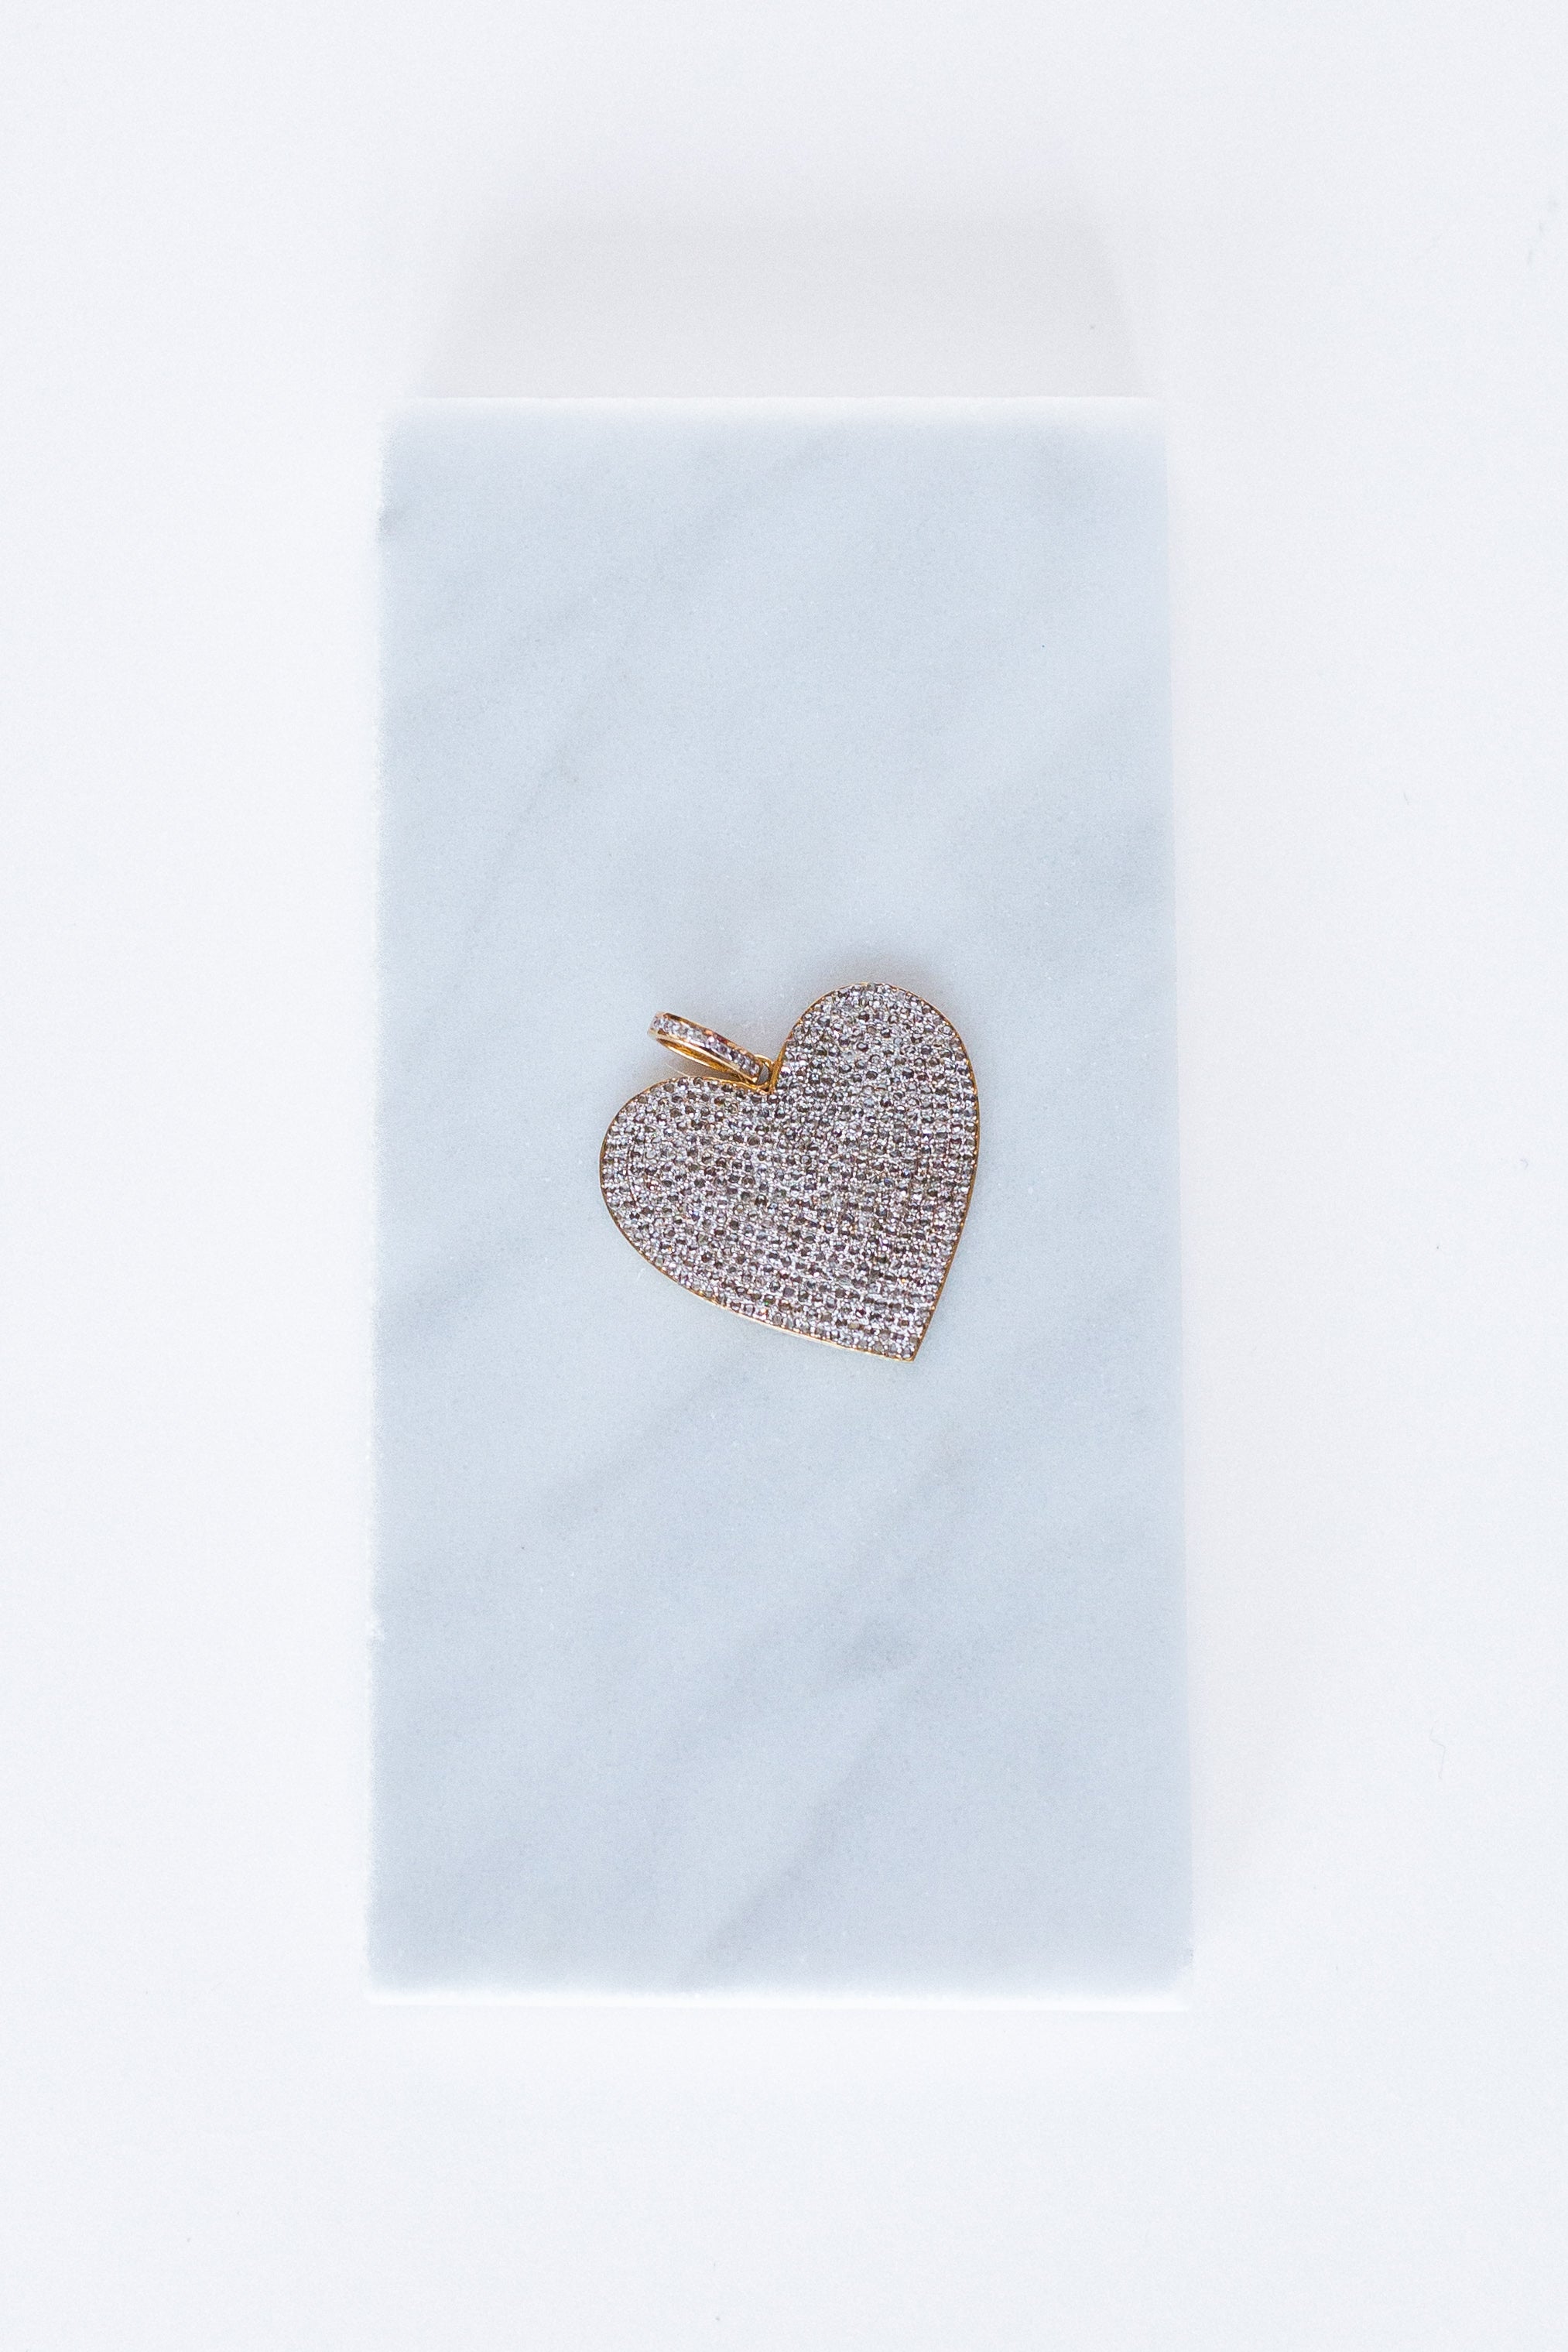 C200 - Pave Diamond Heart Pendant